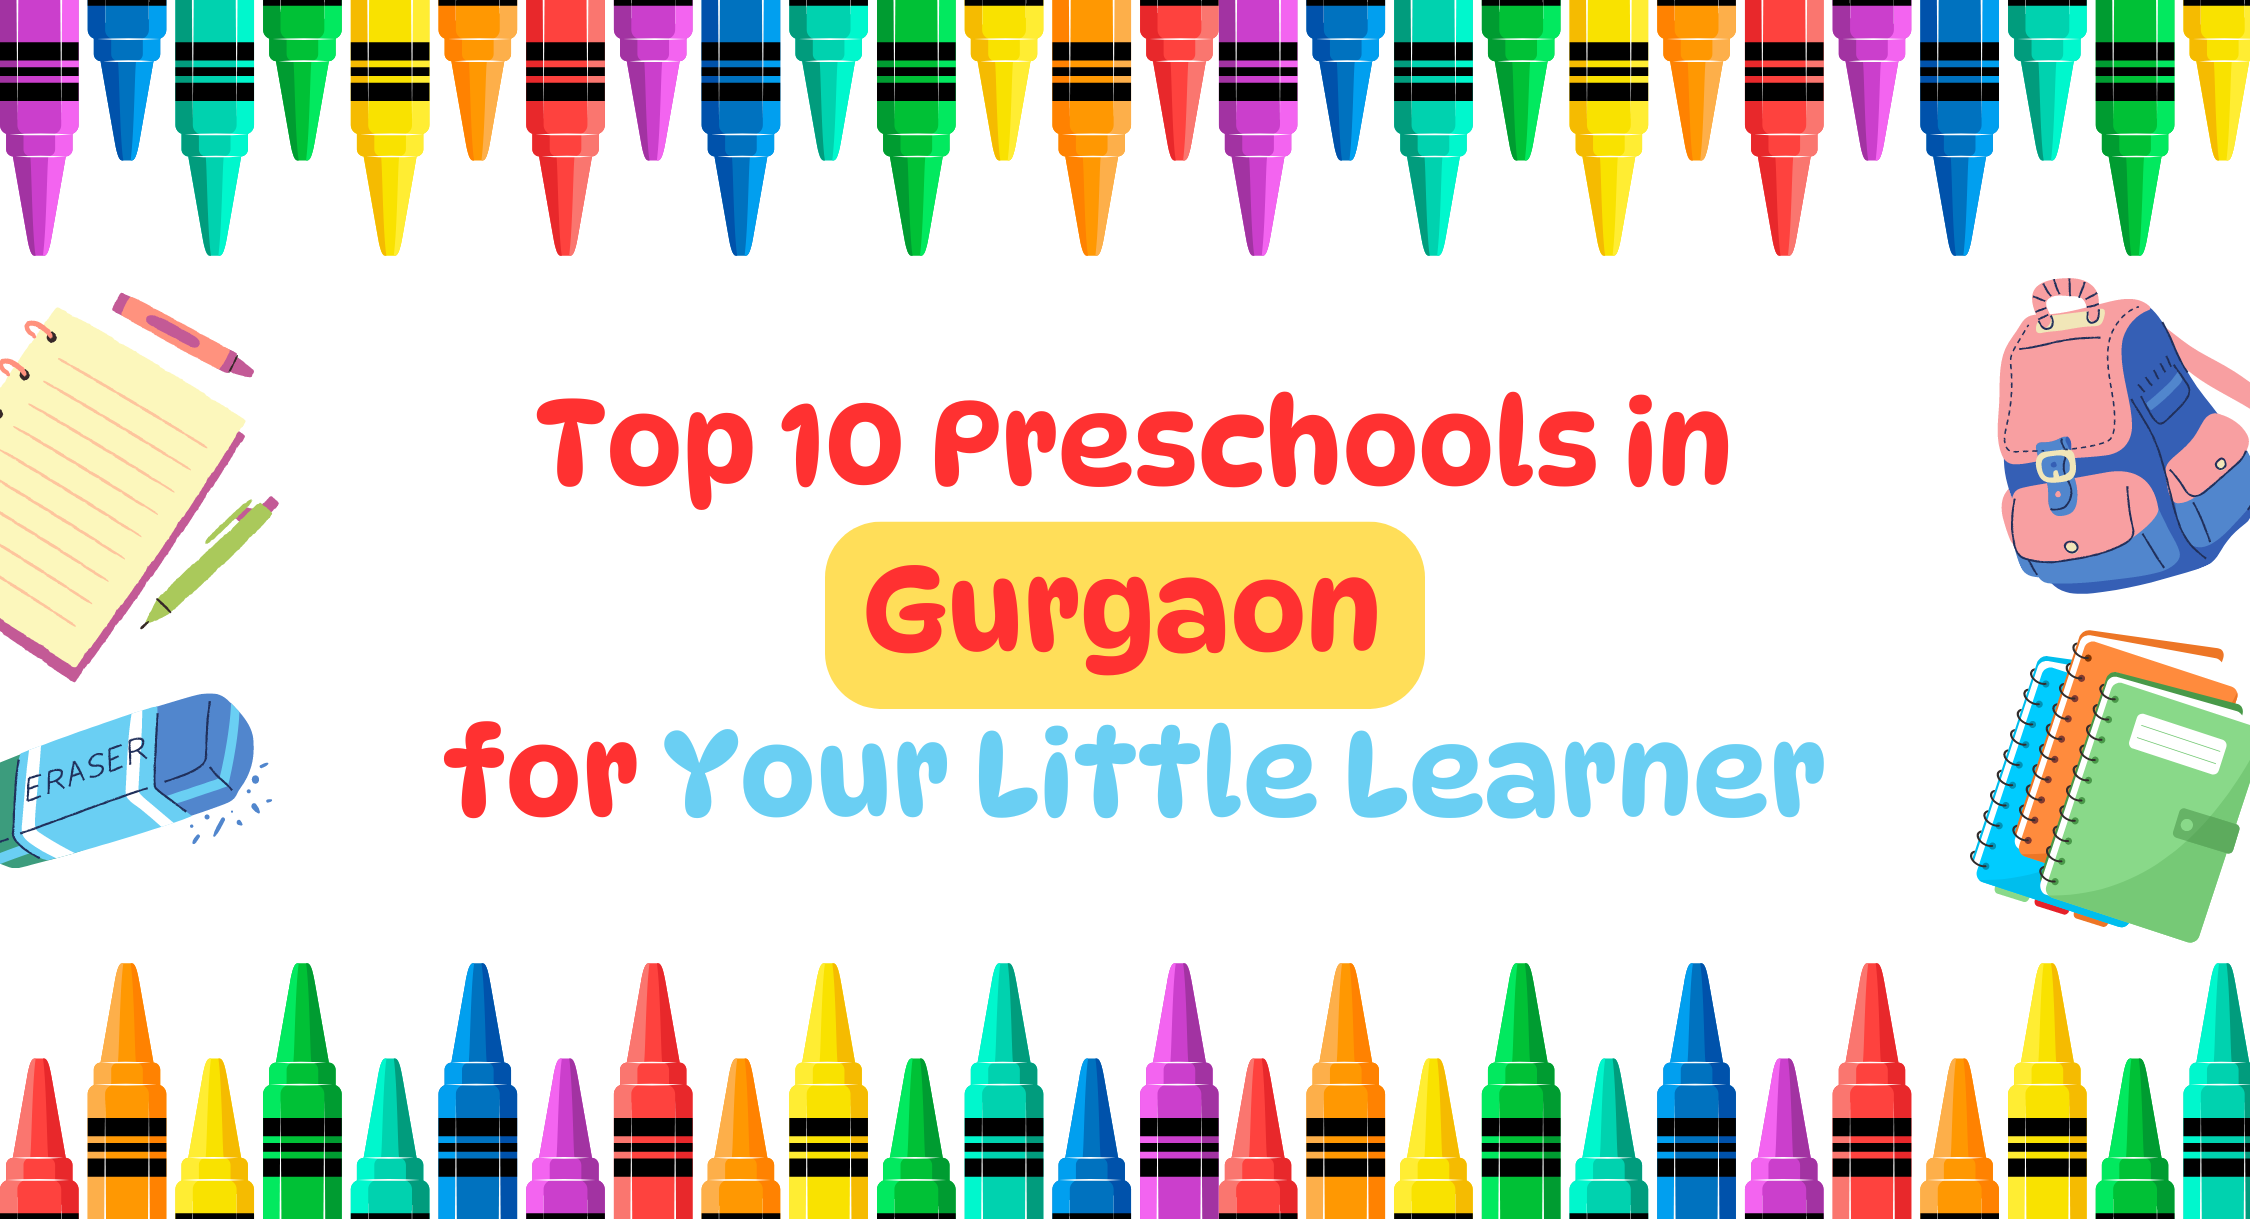 Top 10 Preschools in Gurgaon: Nurturing Young Minds